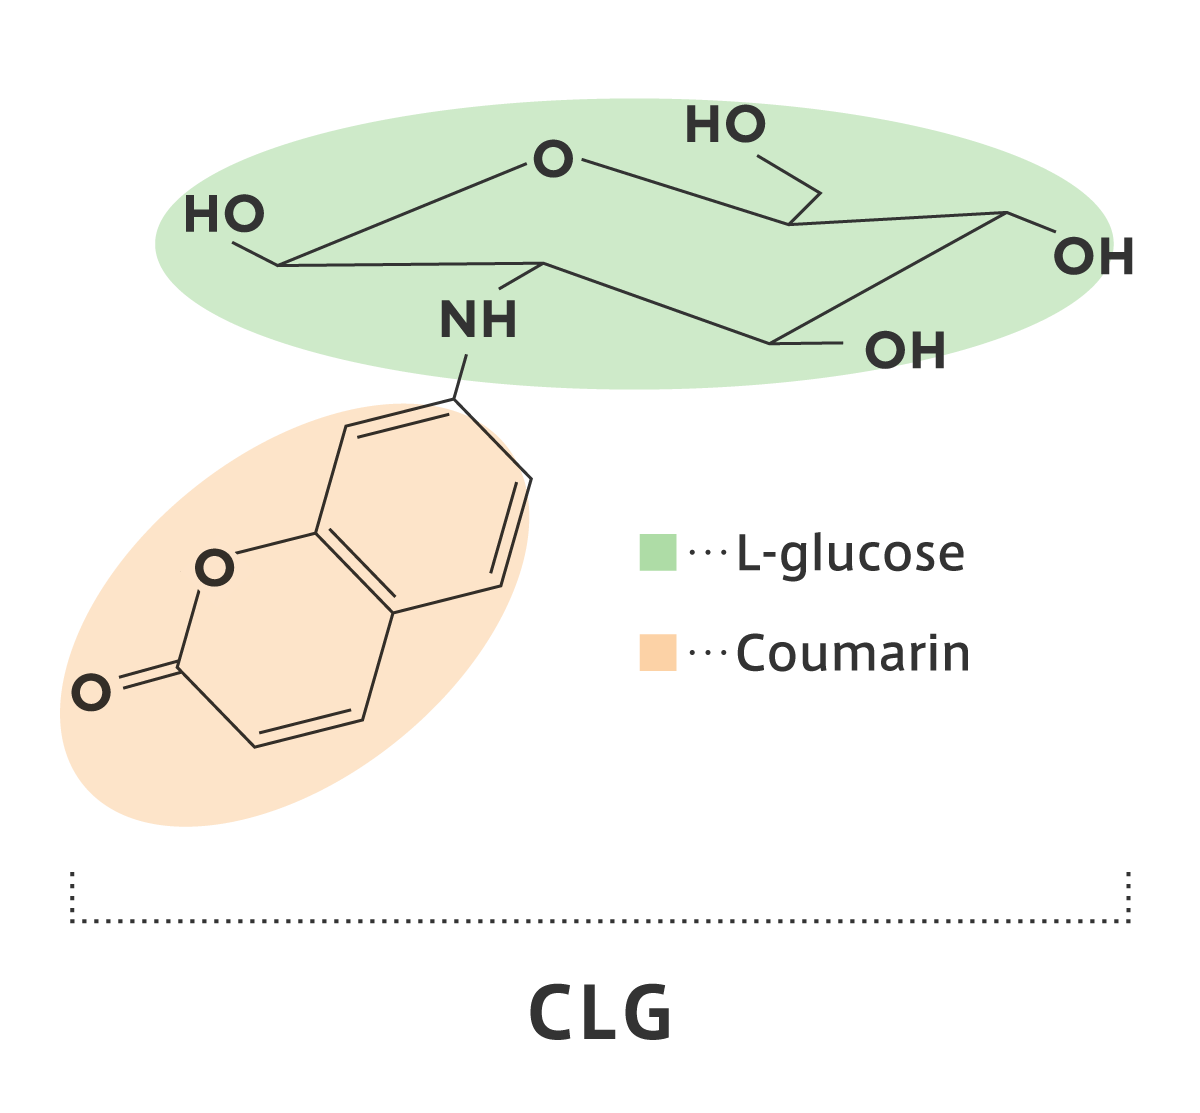 Molecular structure of CLG